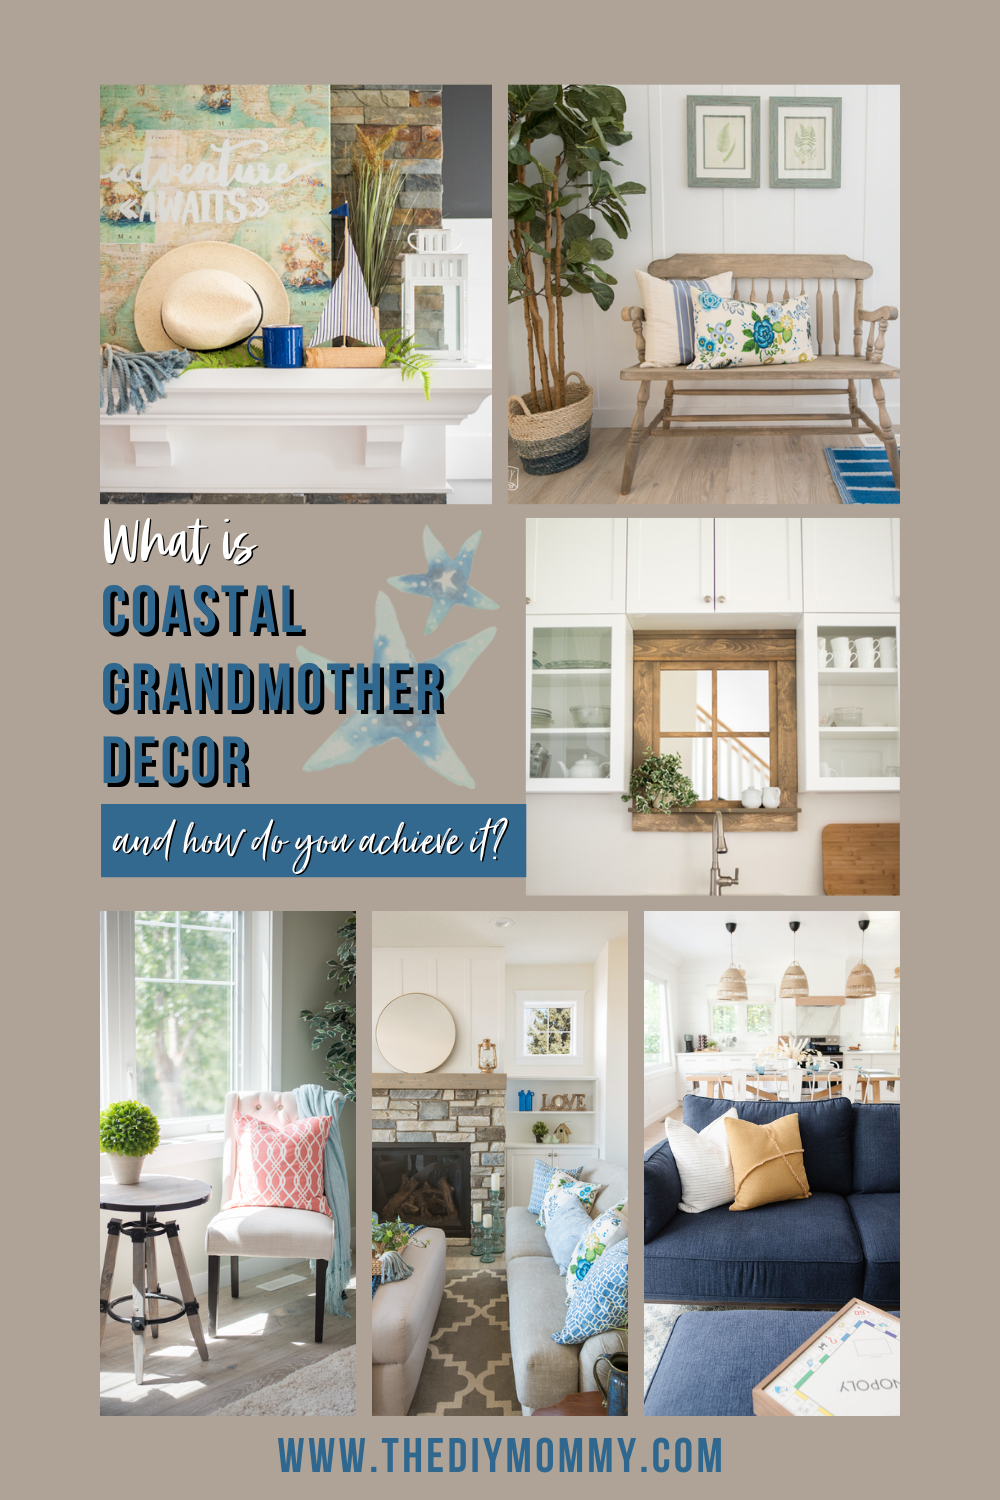 Coastal grandmother decor is a current design trend